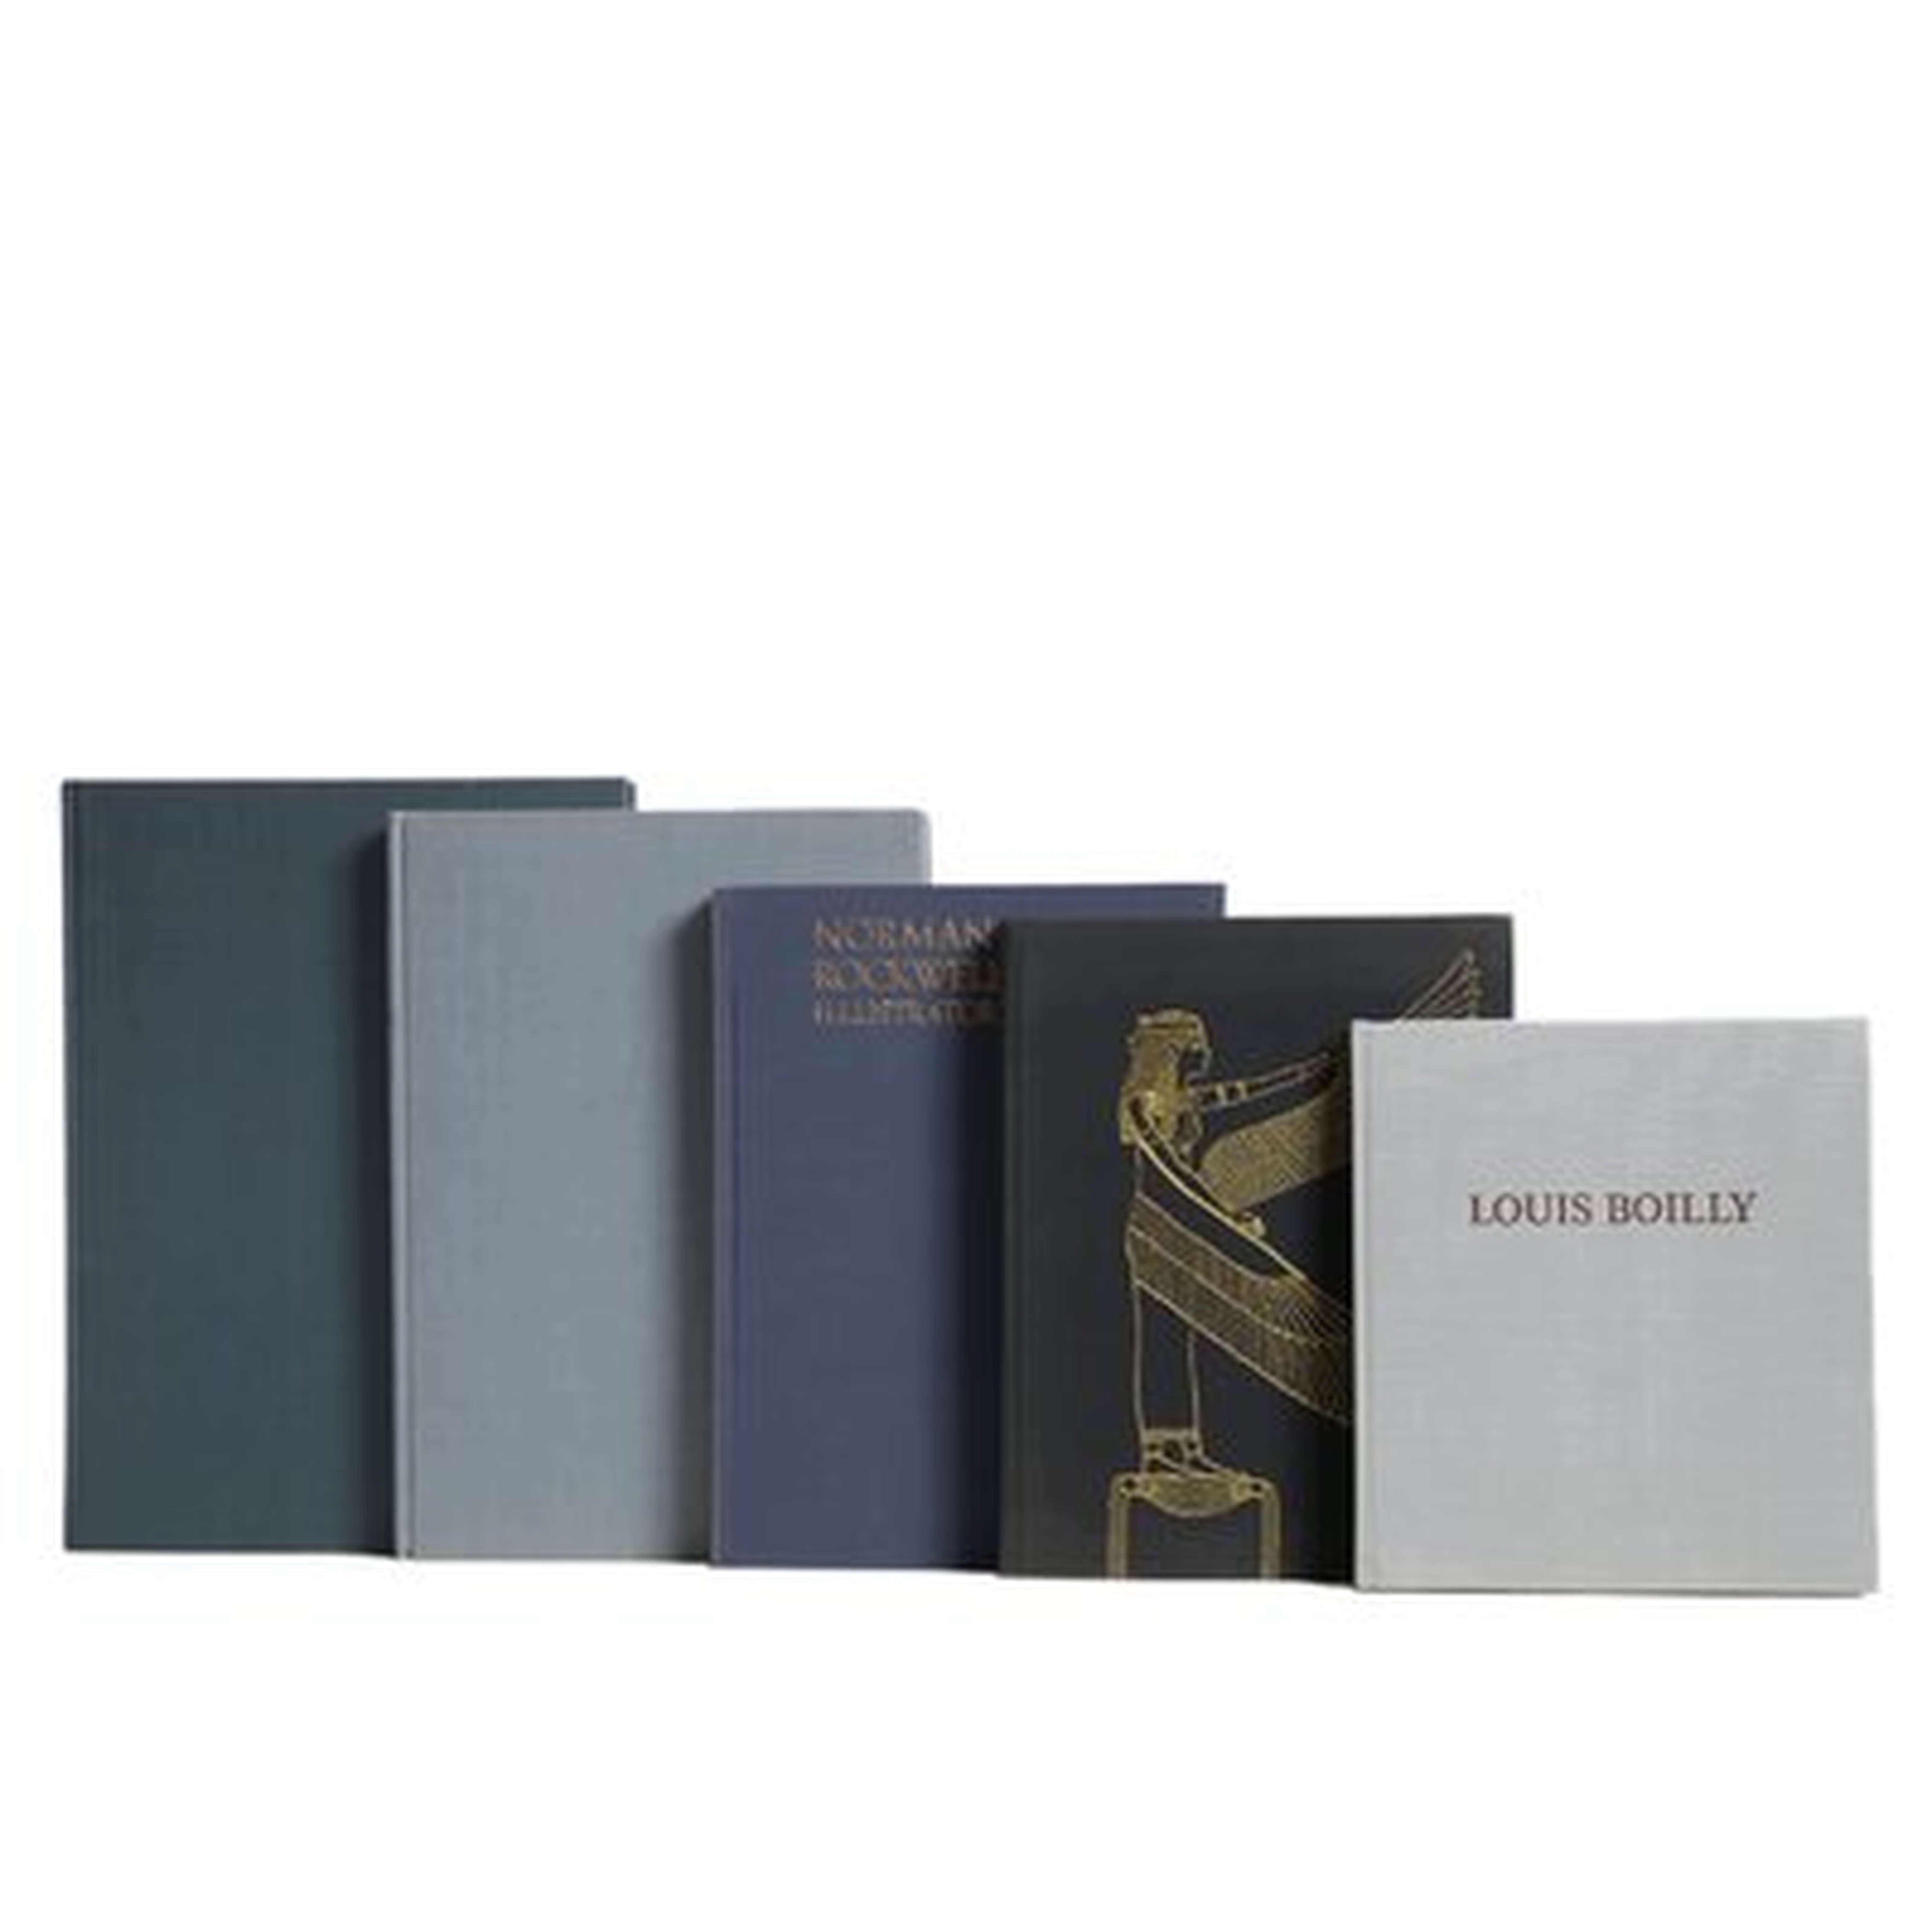 ColorStak Authentic Decorative Books, Granite, Set of 5 - Wayfair